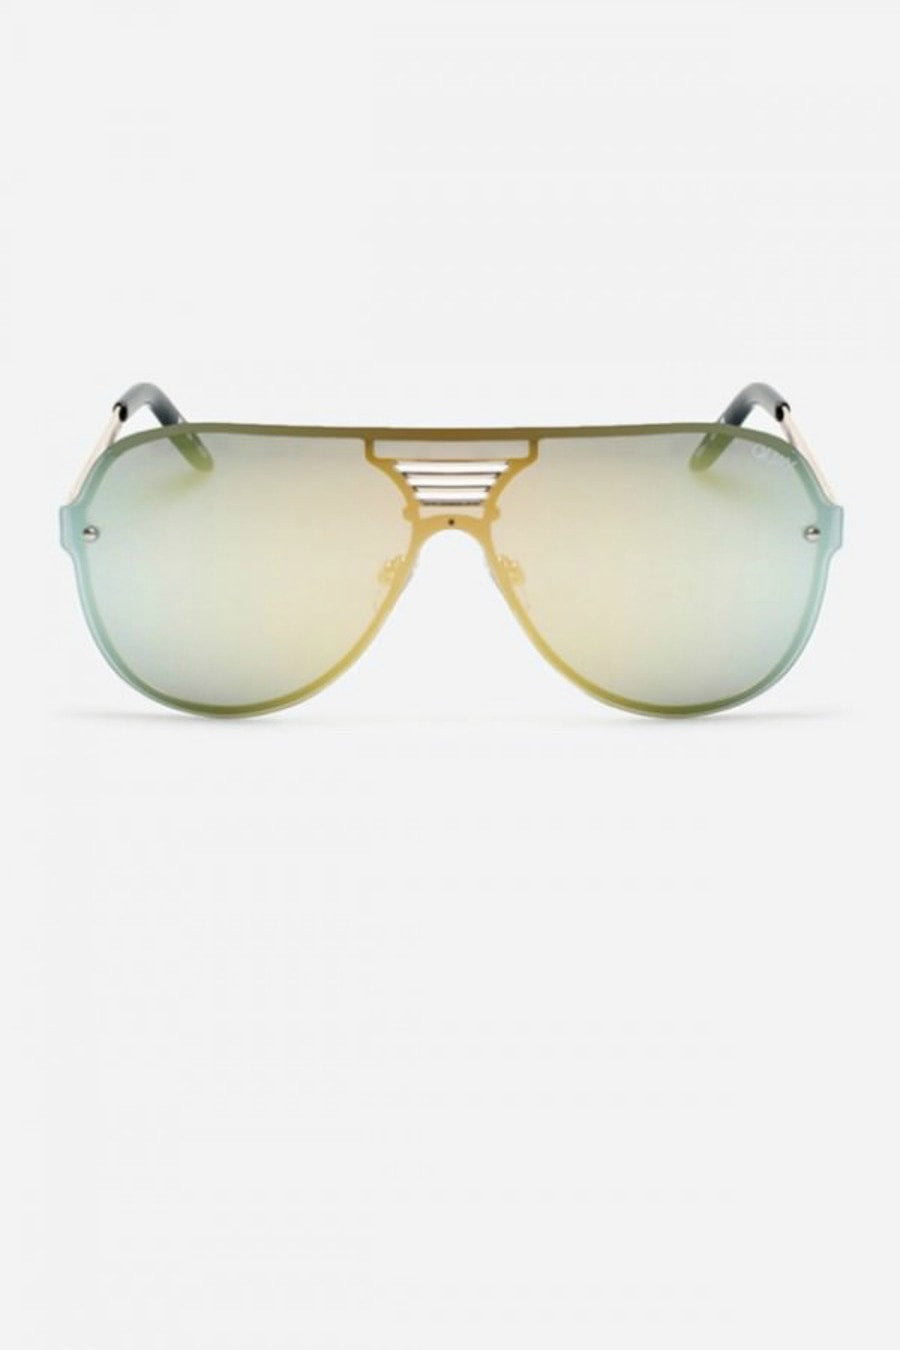 Quay Australia Mirrored Sunglasses for Women | Mercari